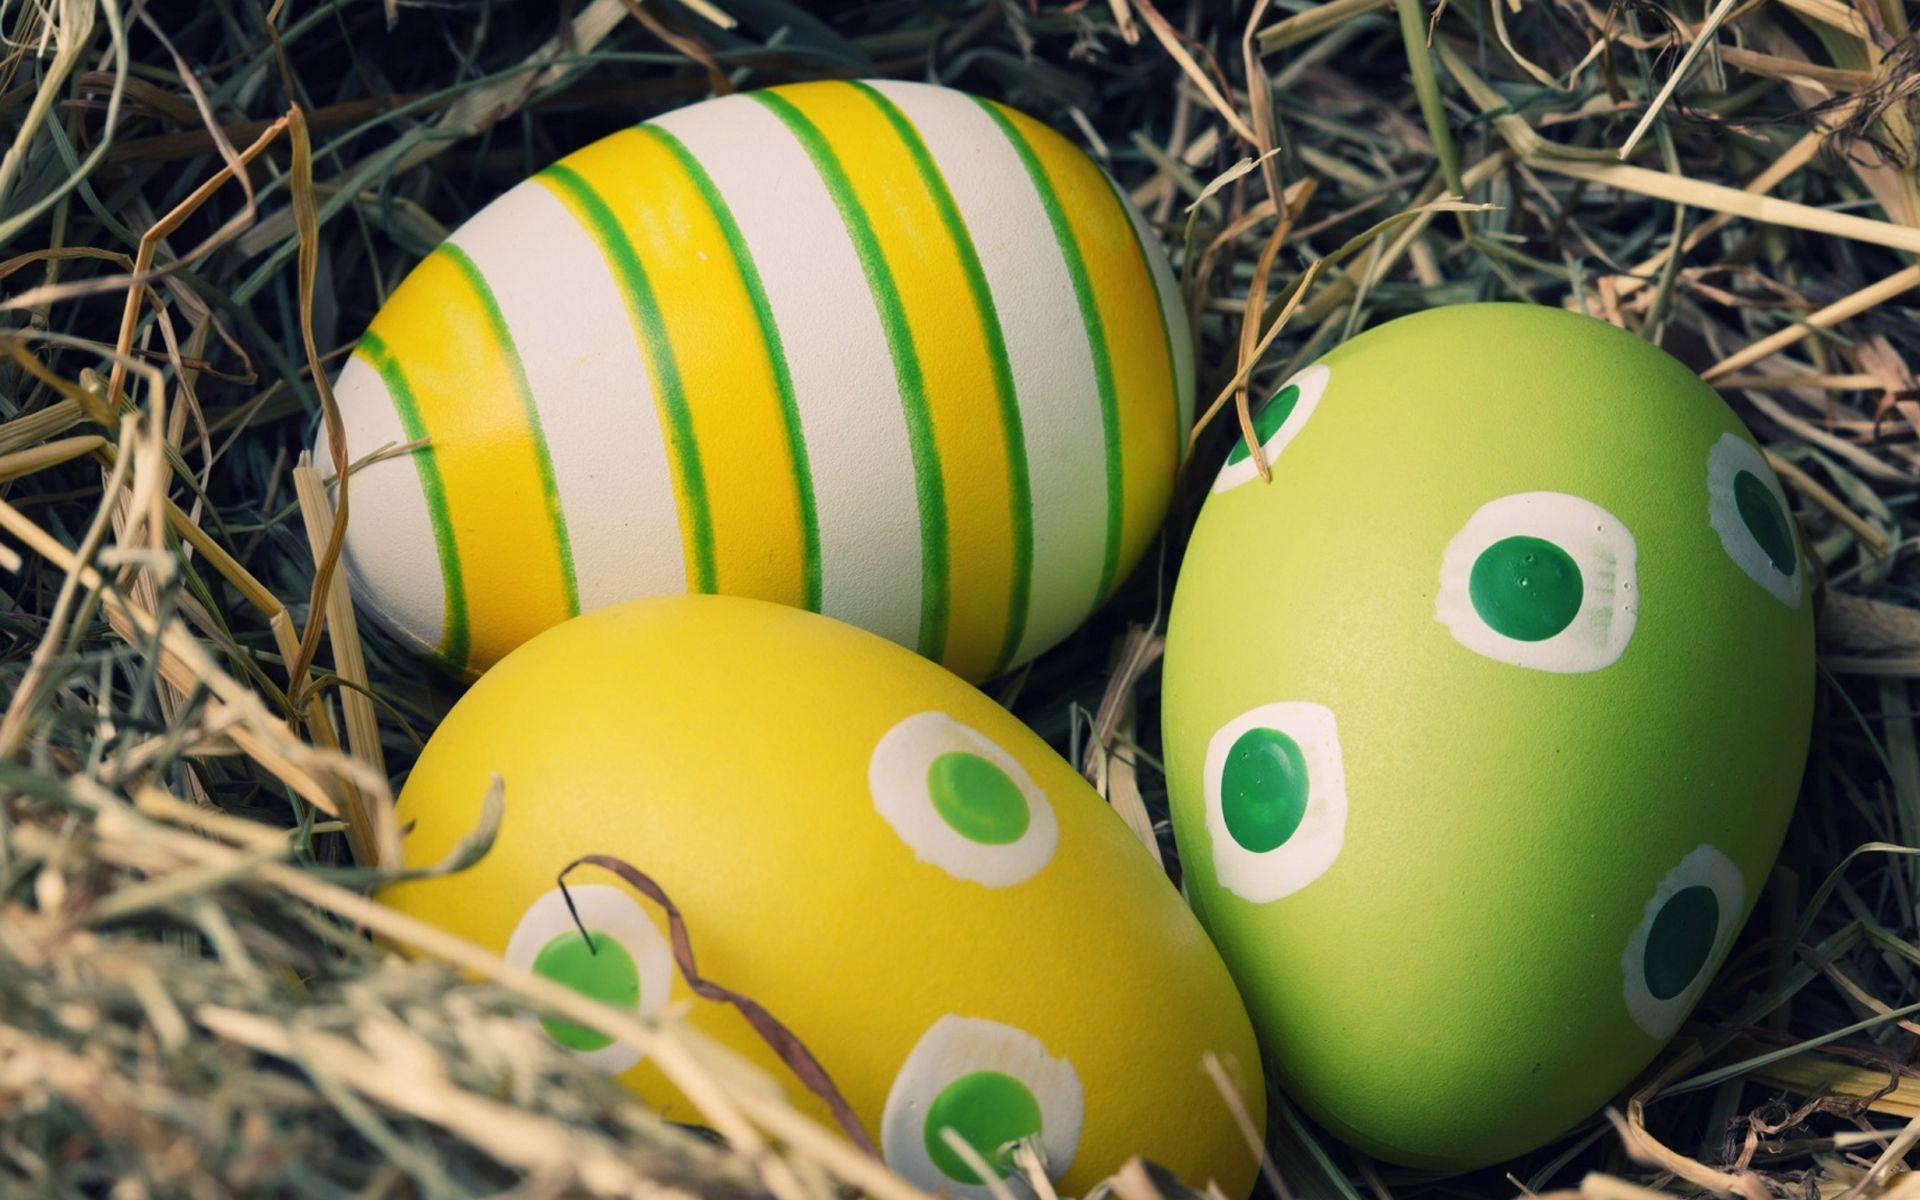 eggs decoration image 2017